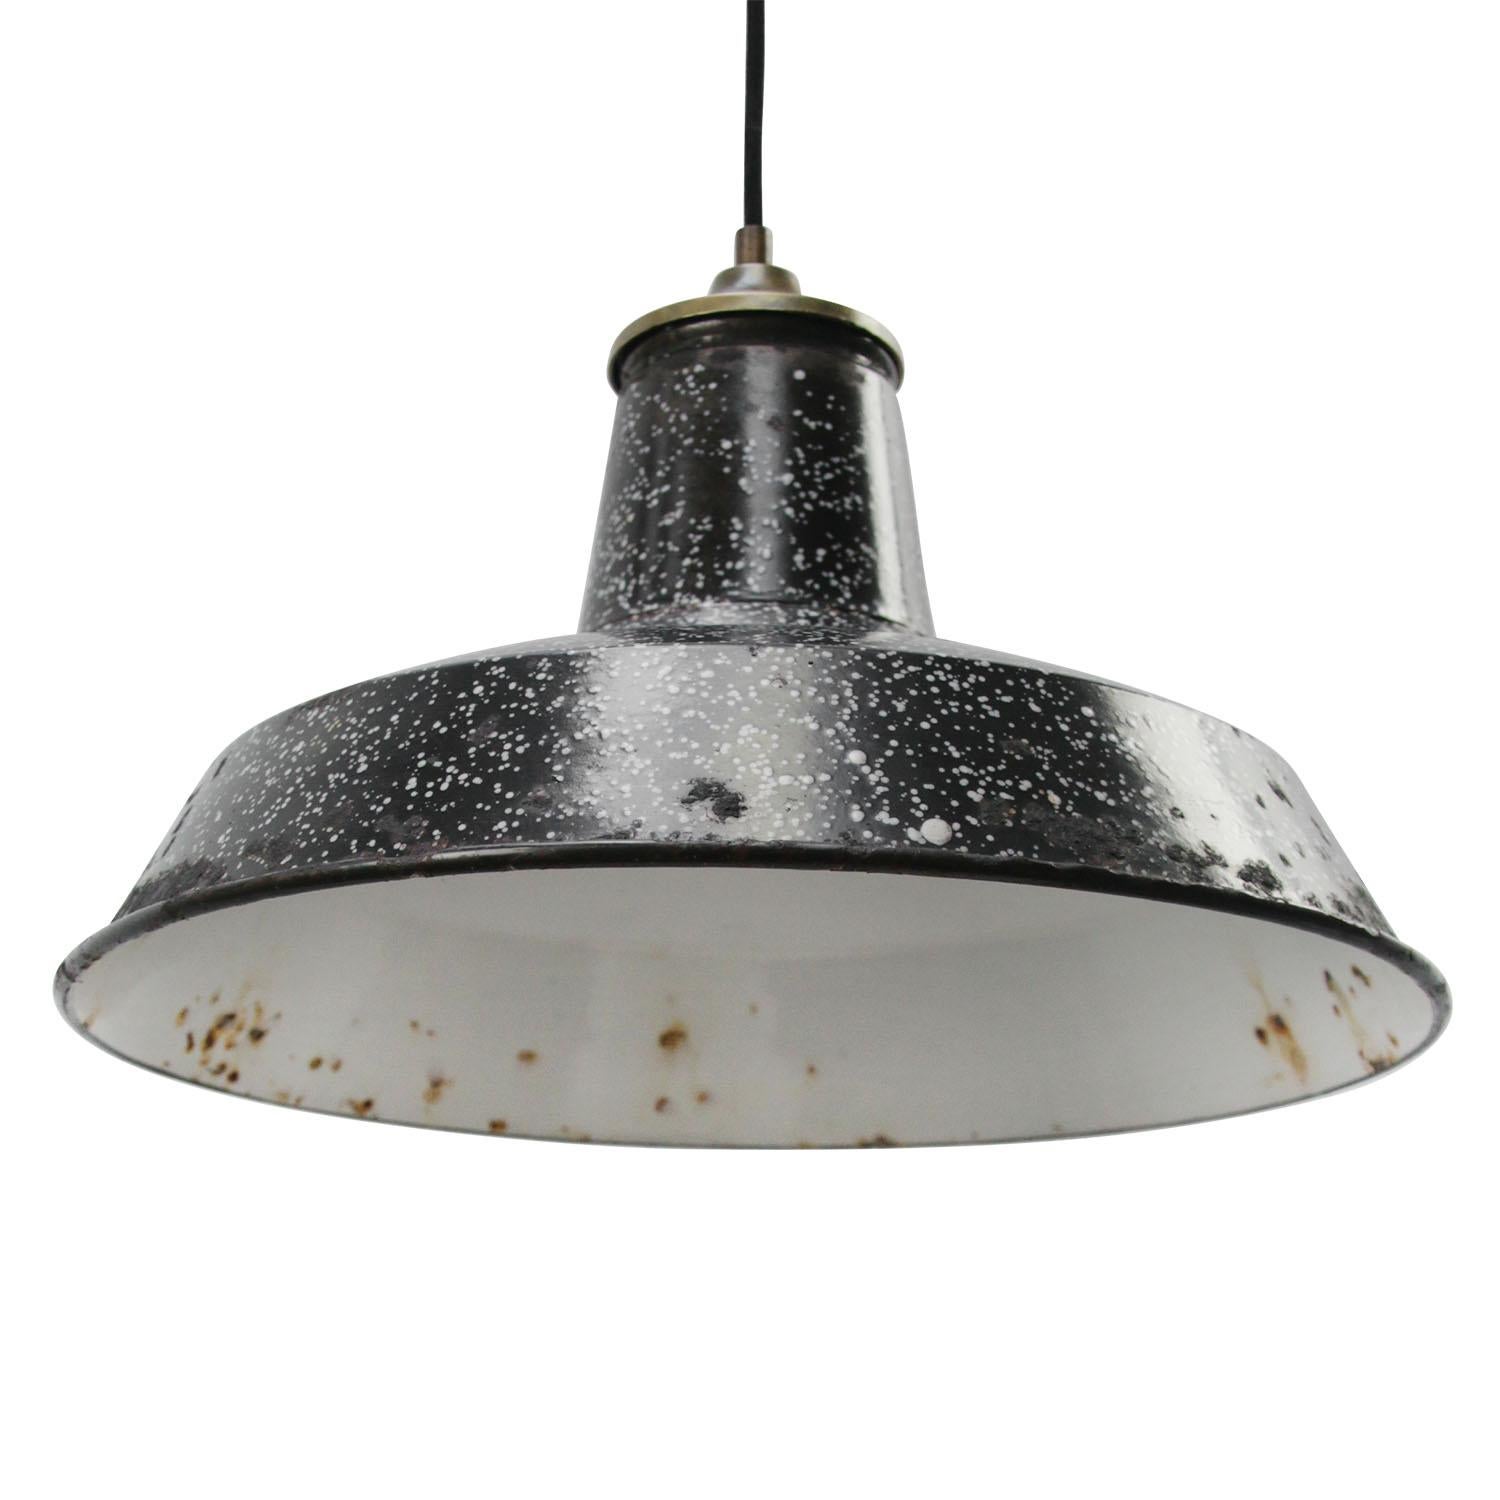 Belgian Black Speckled Enamel Vintage Industrial Pendant Lights In Good Condition For Sale In Amsterdam, NL